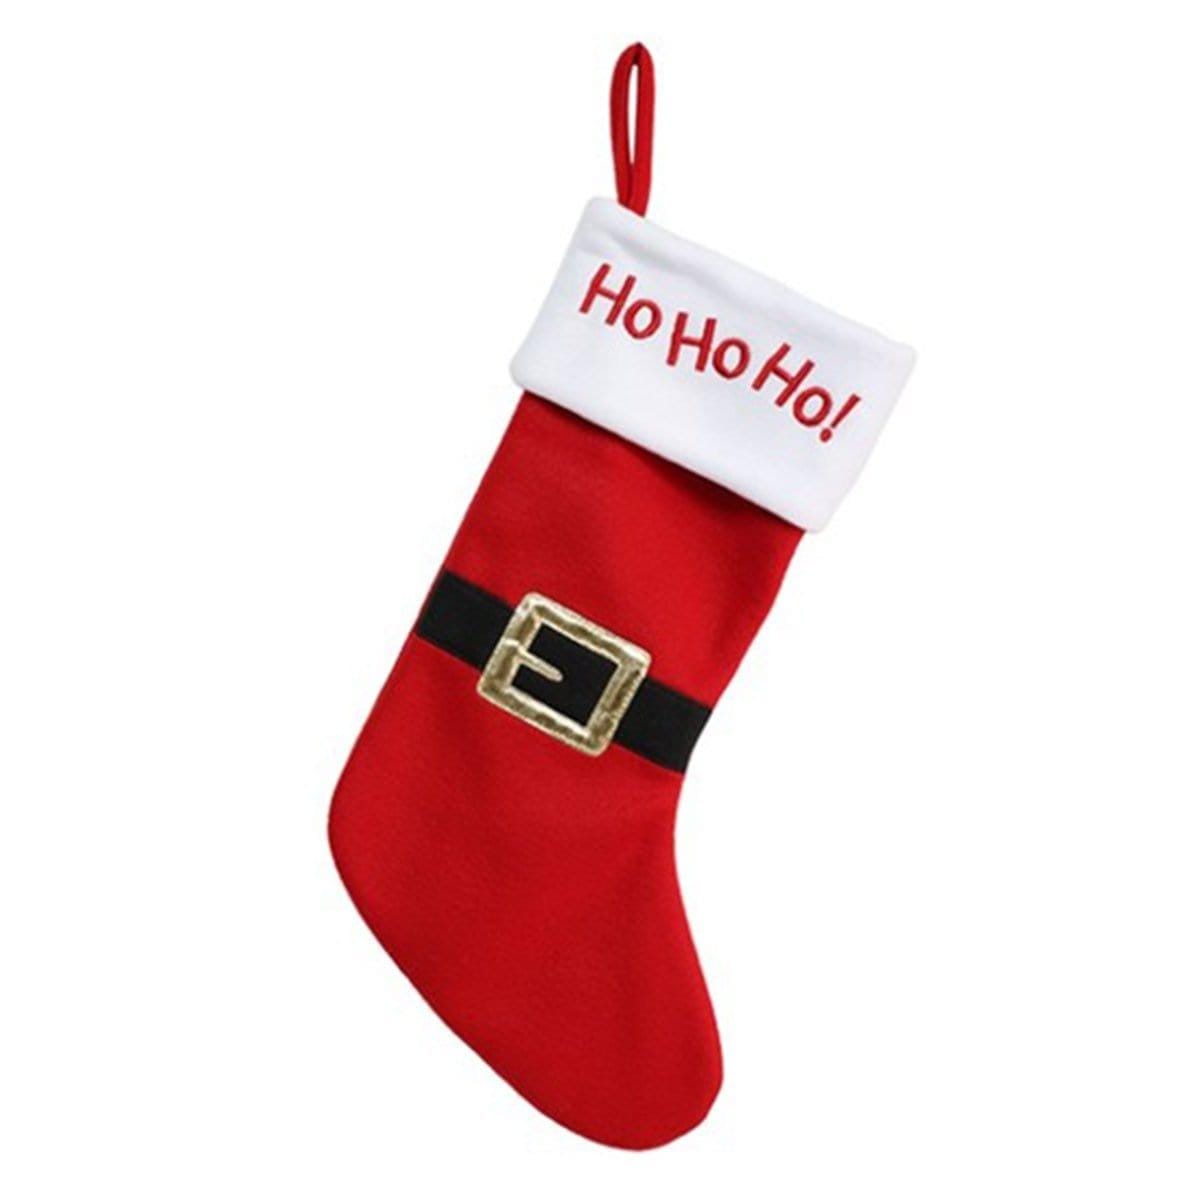 Buy Christmas "Ho Ho Ho!" Christmas stocking sold at Party Expert